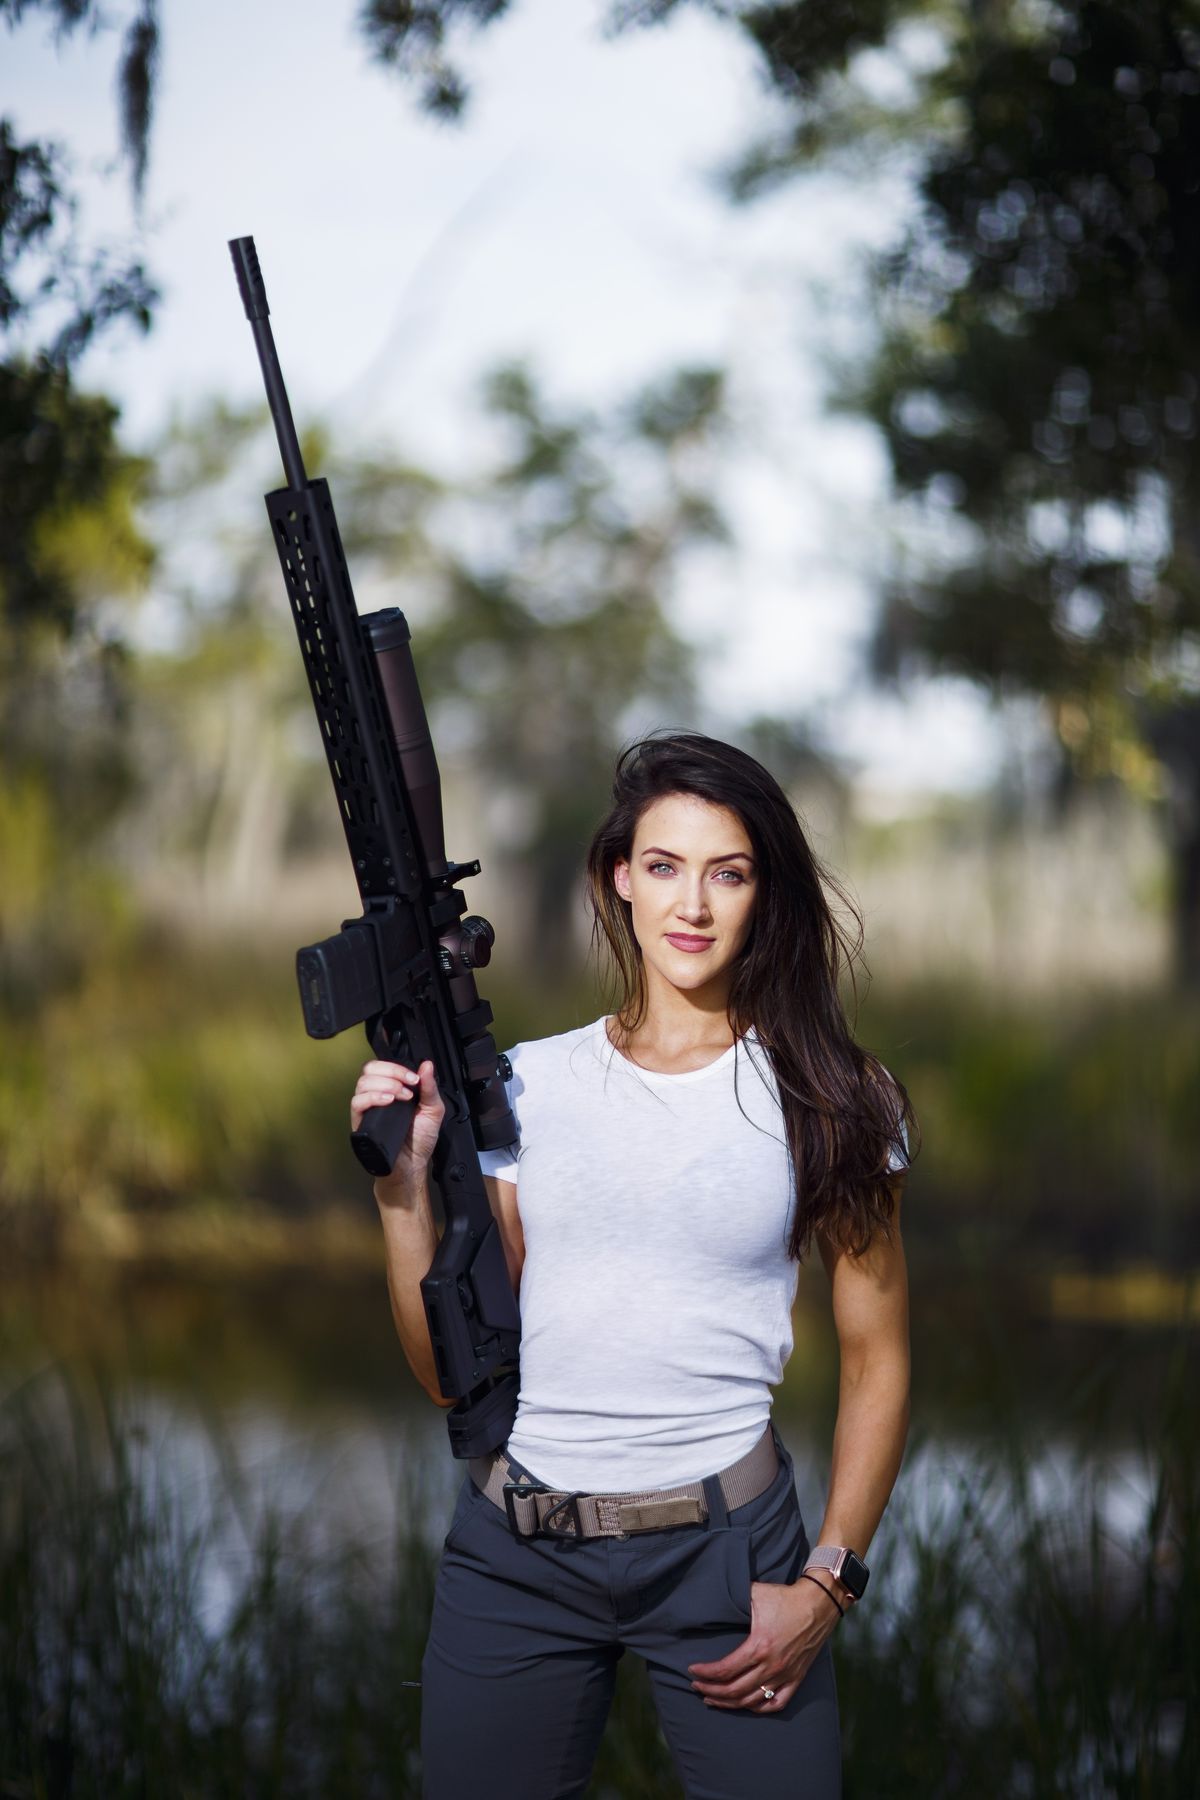 carol anstey share young gun feeds wifey photos